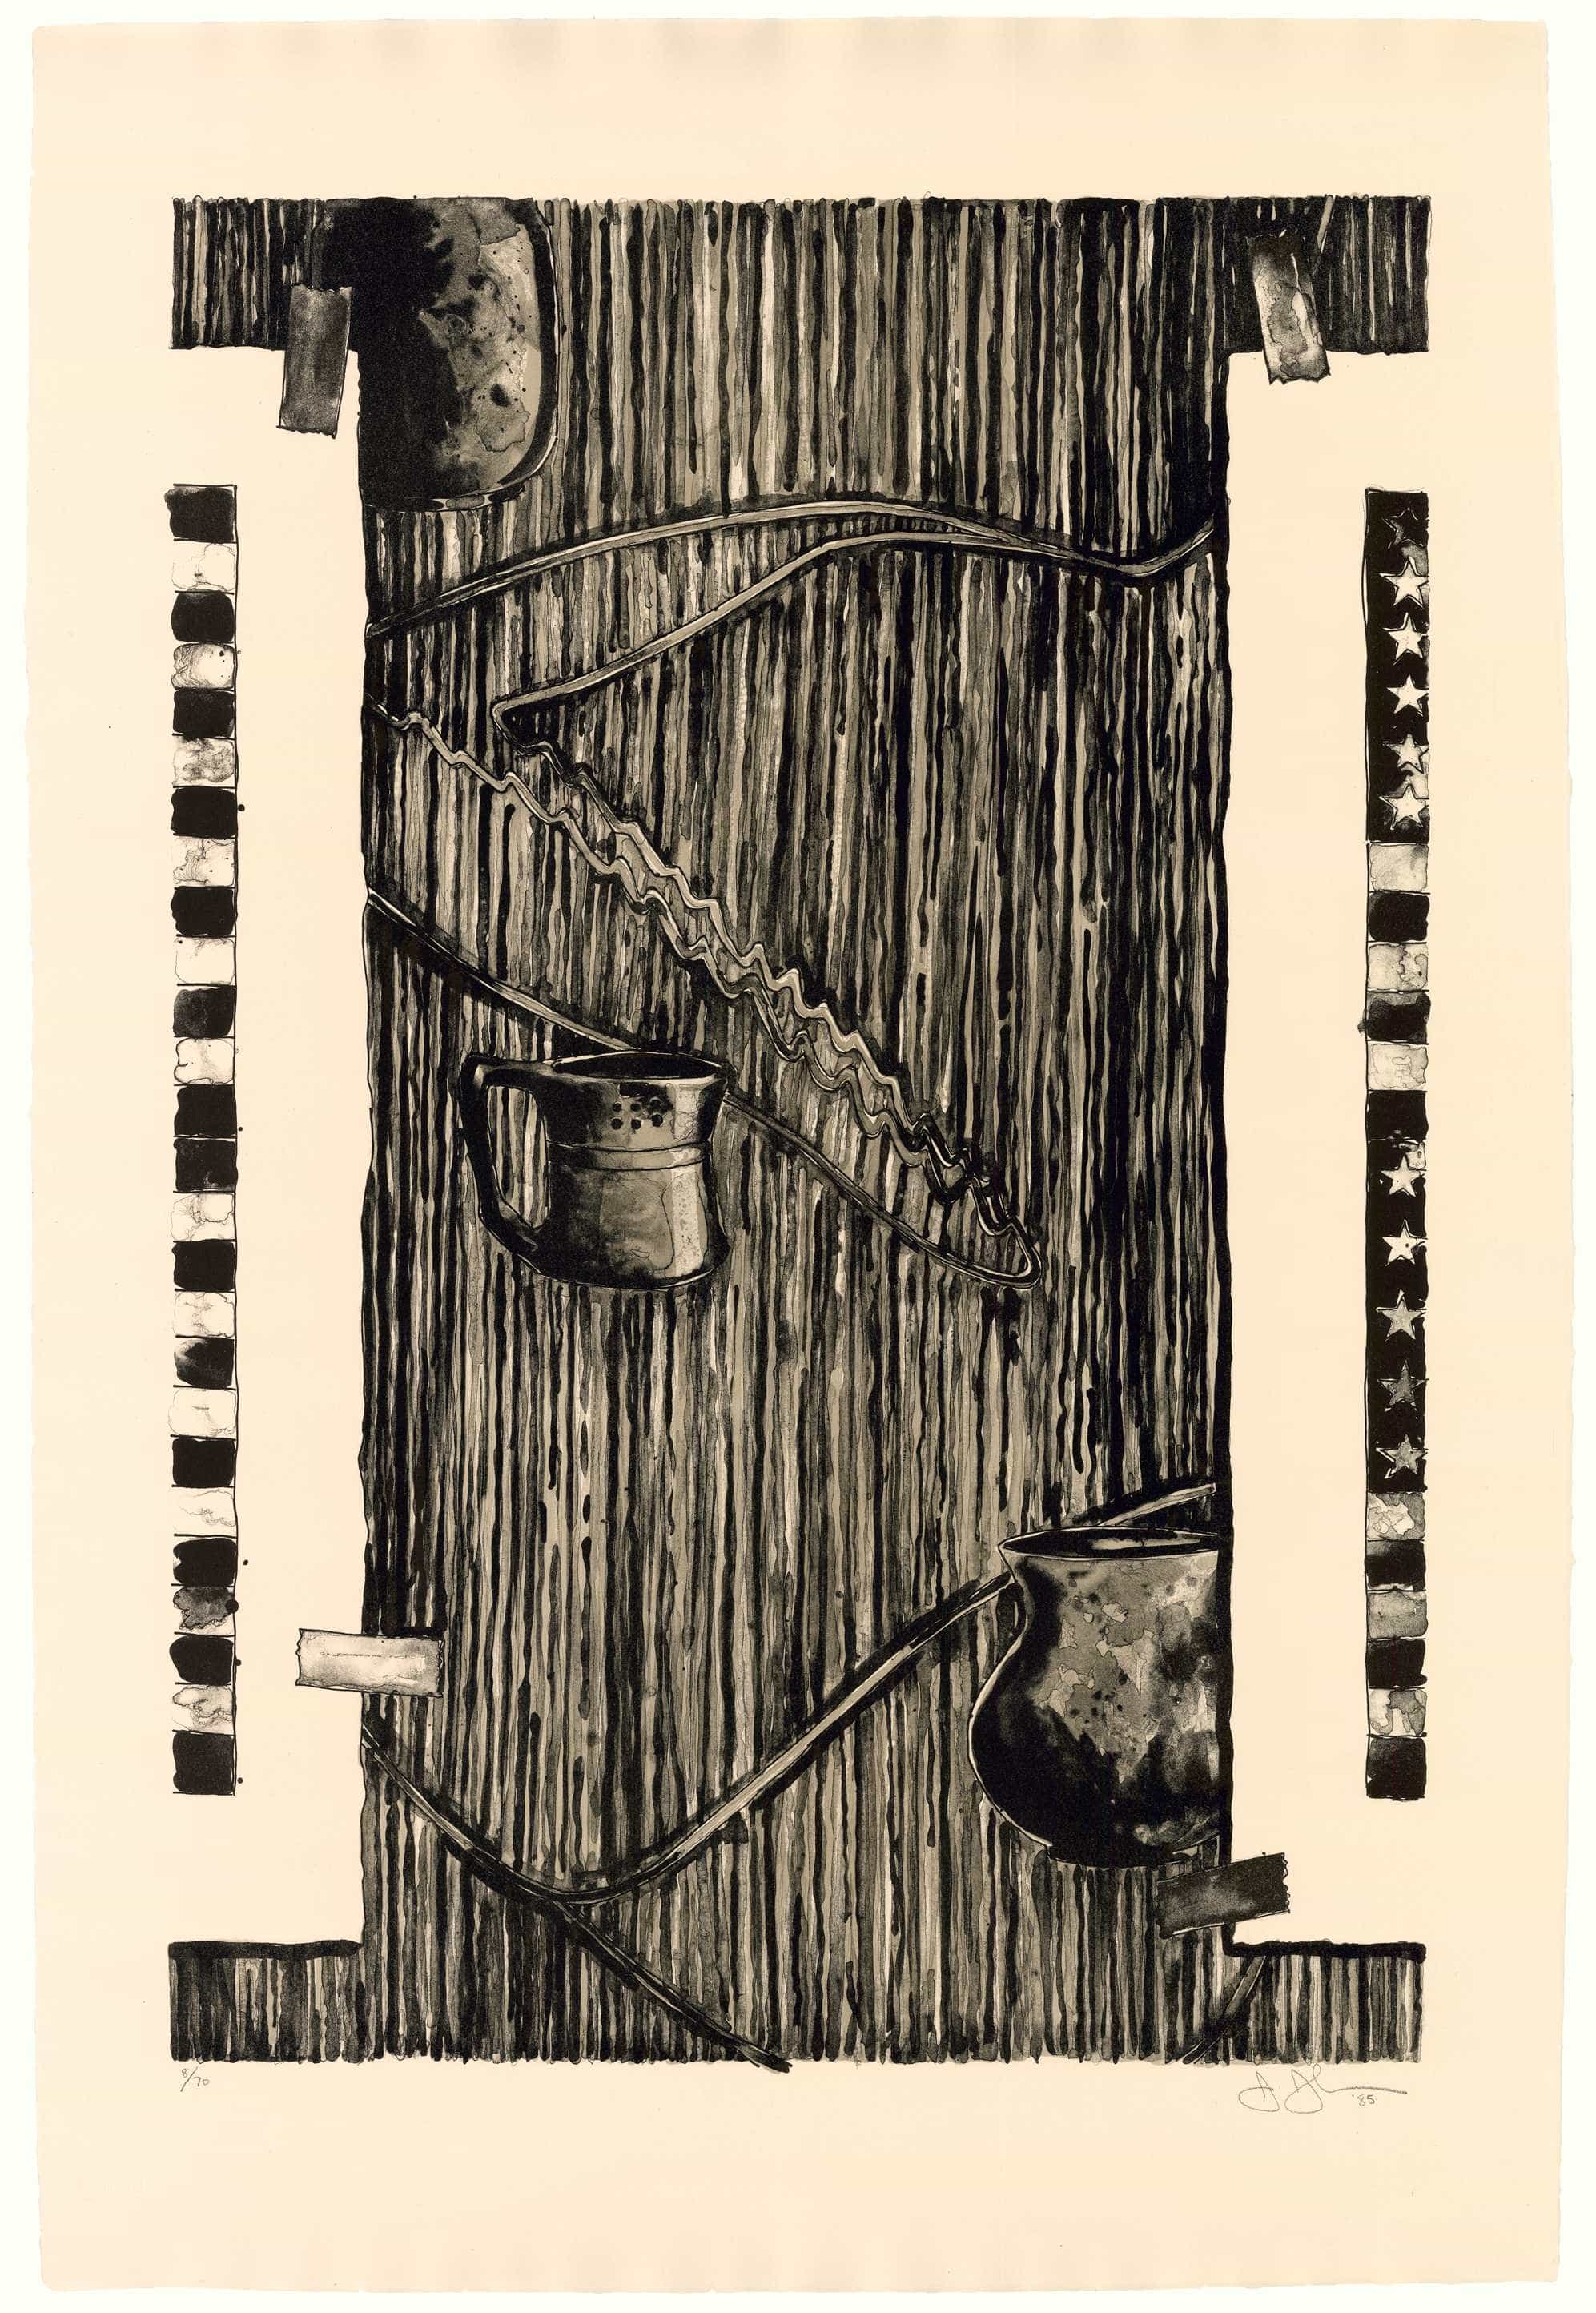 Jasper Johns, Ventriloquist, 1985